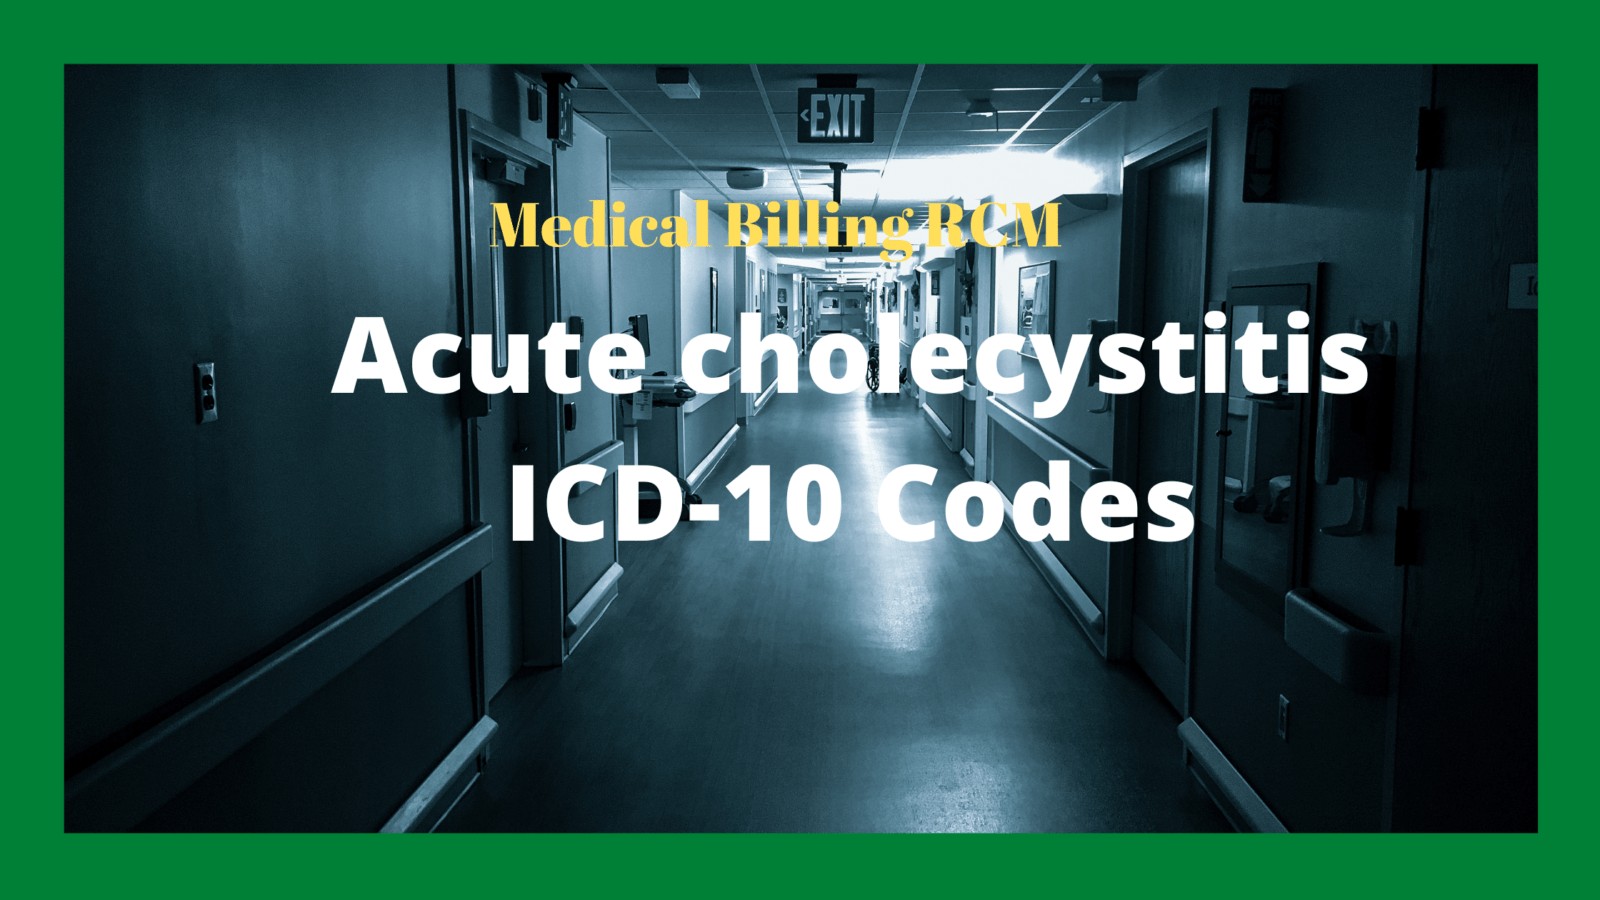 Acute cholecystitis ICD-10